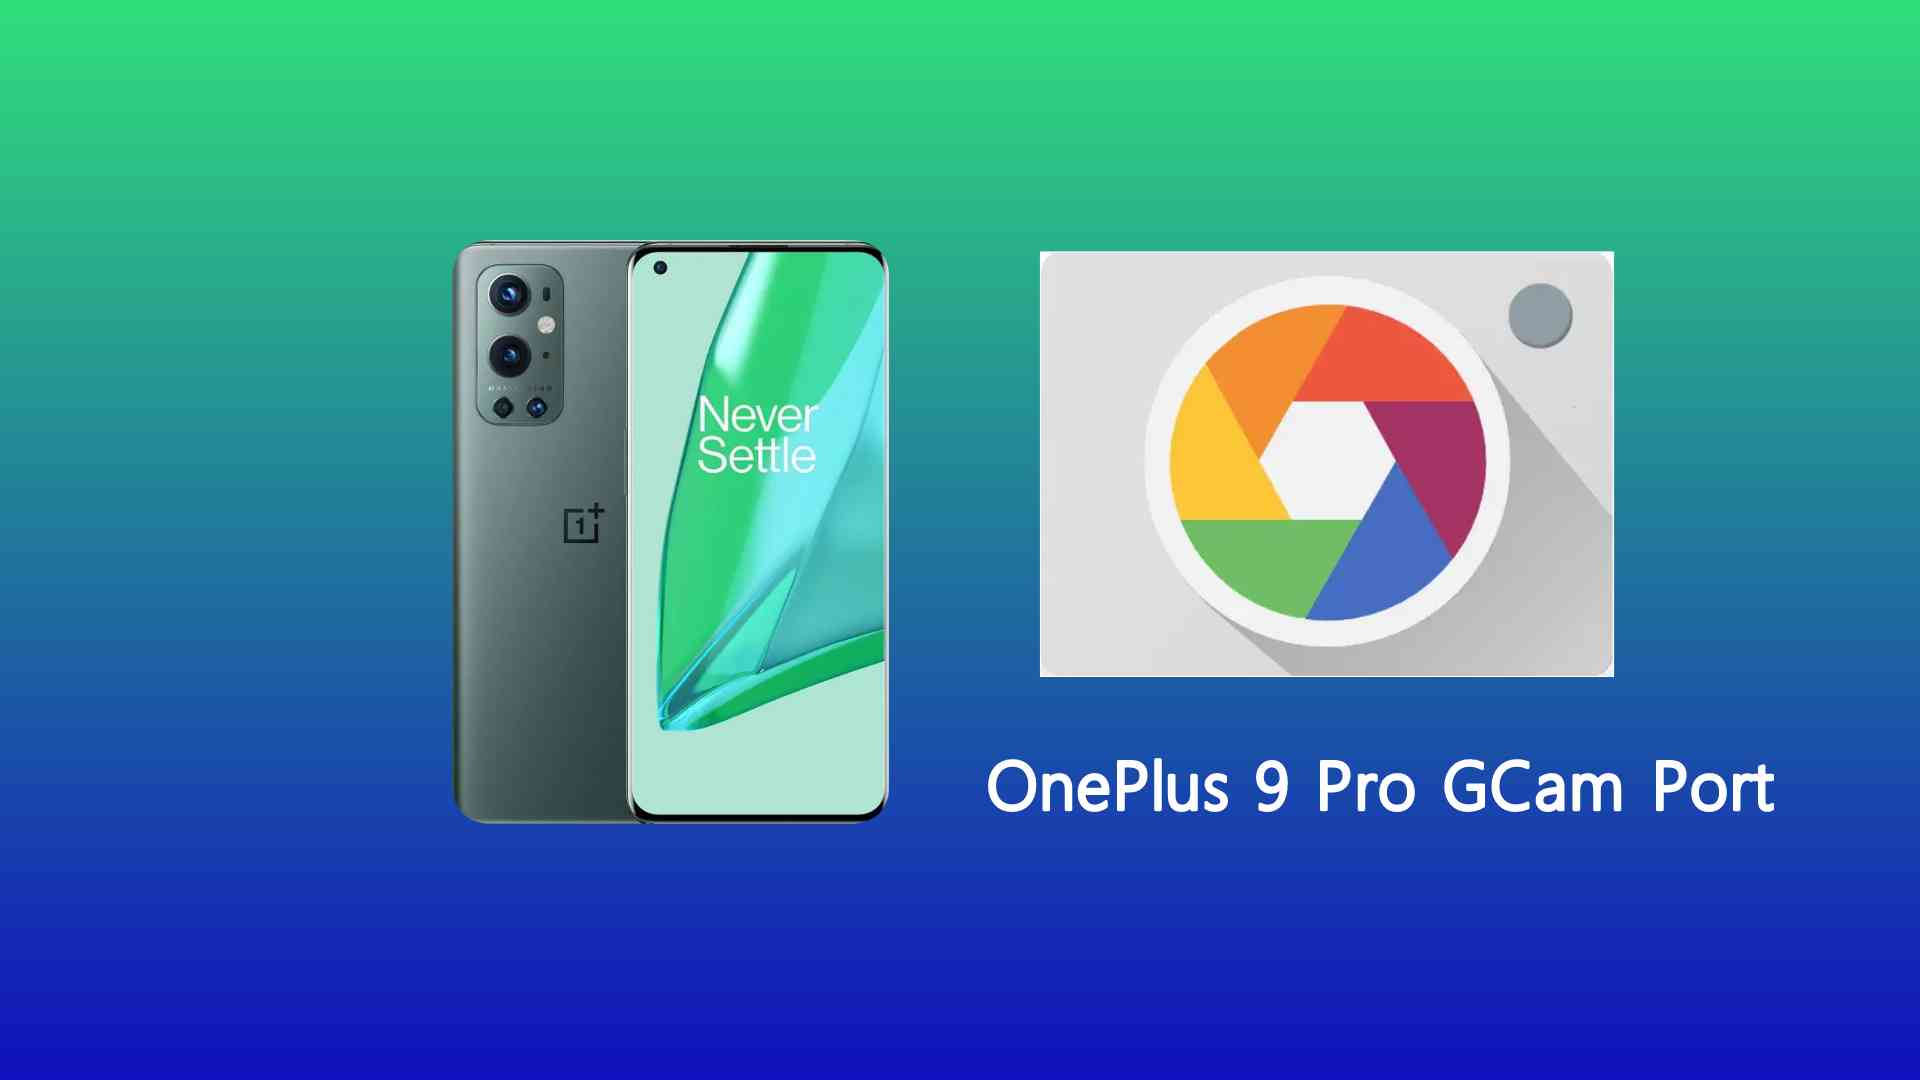 OnePlus 9 Pro GCam Port